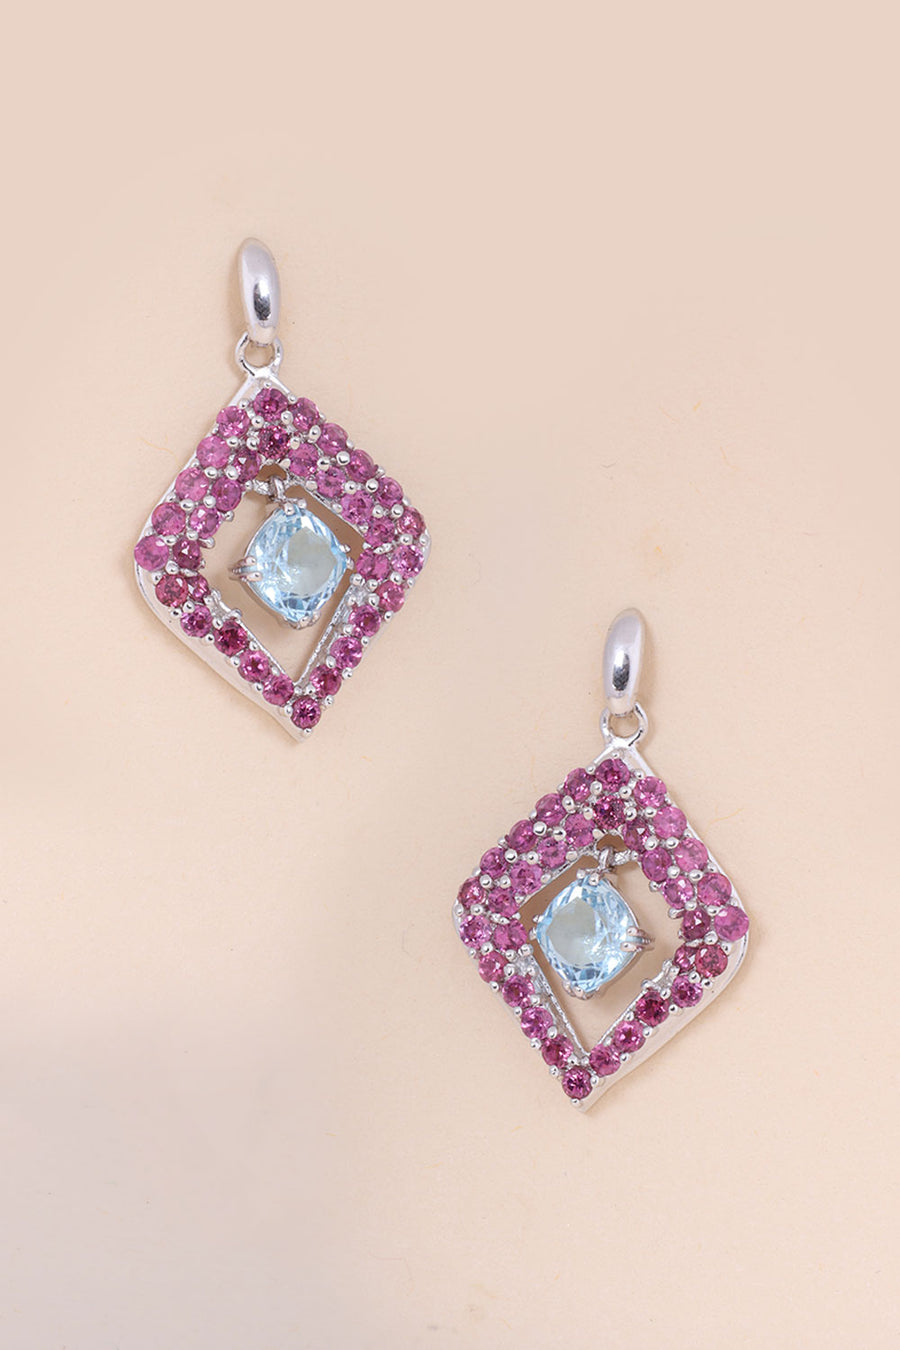 Blue Topaz & Rhodolite Sterling Silver Stud Earring - Avishya